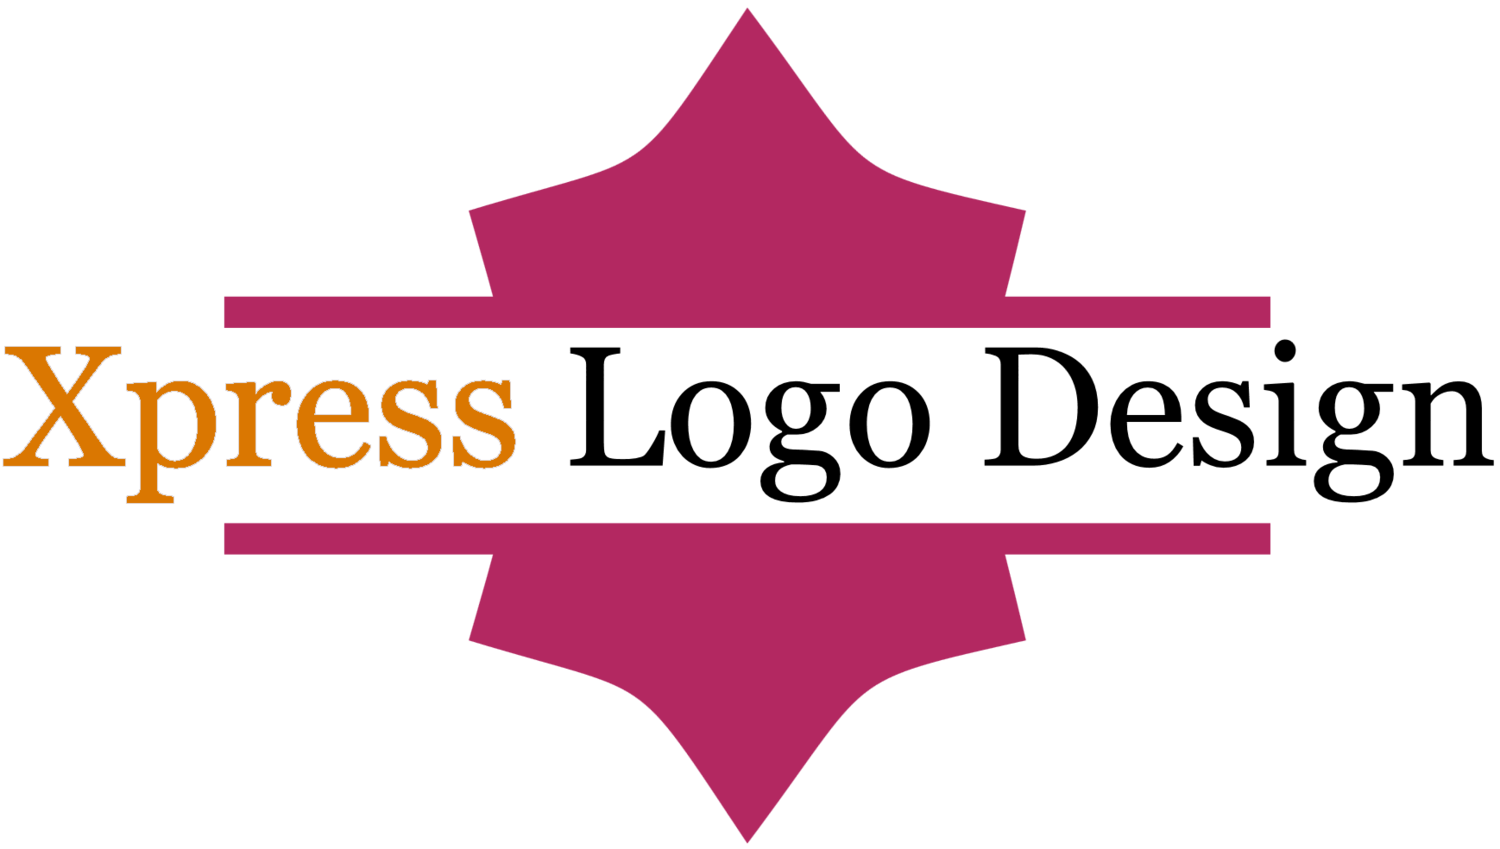 Xpress Logo - Xpress Logo Design